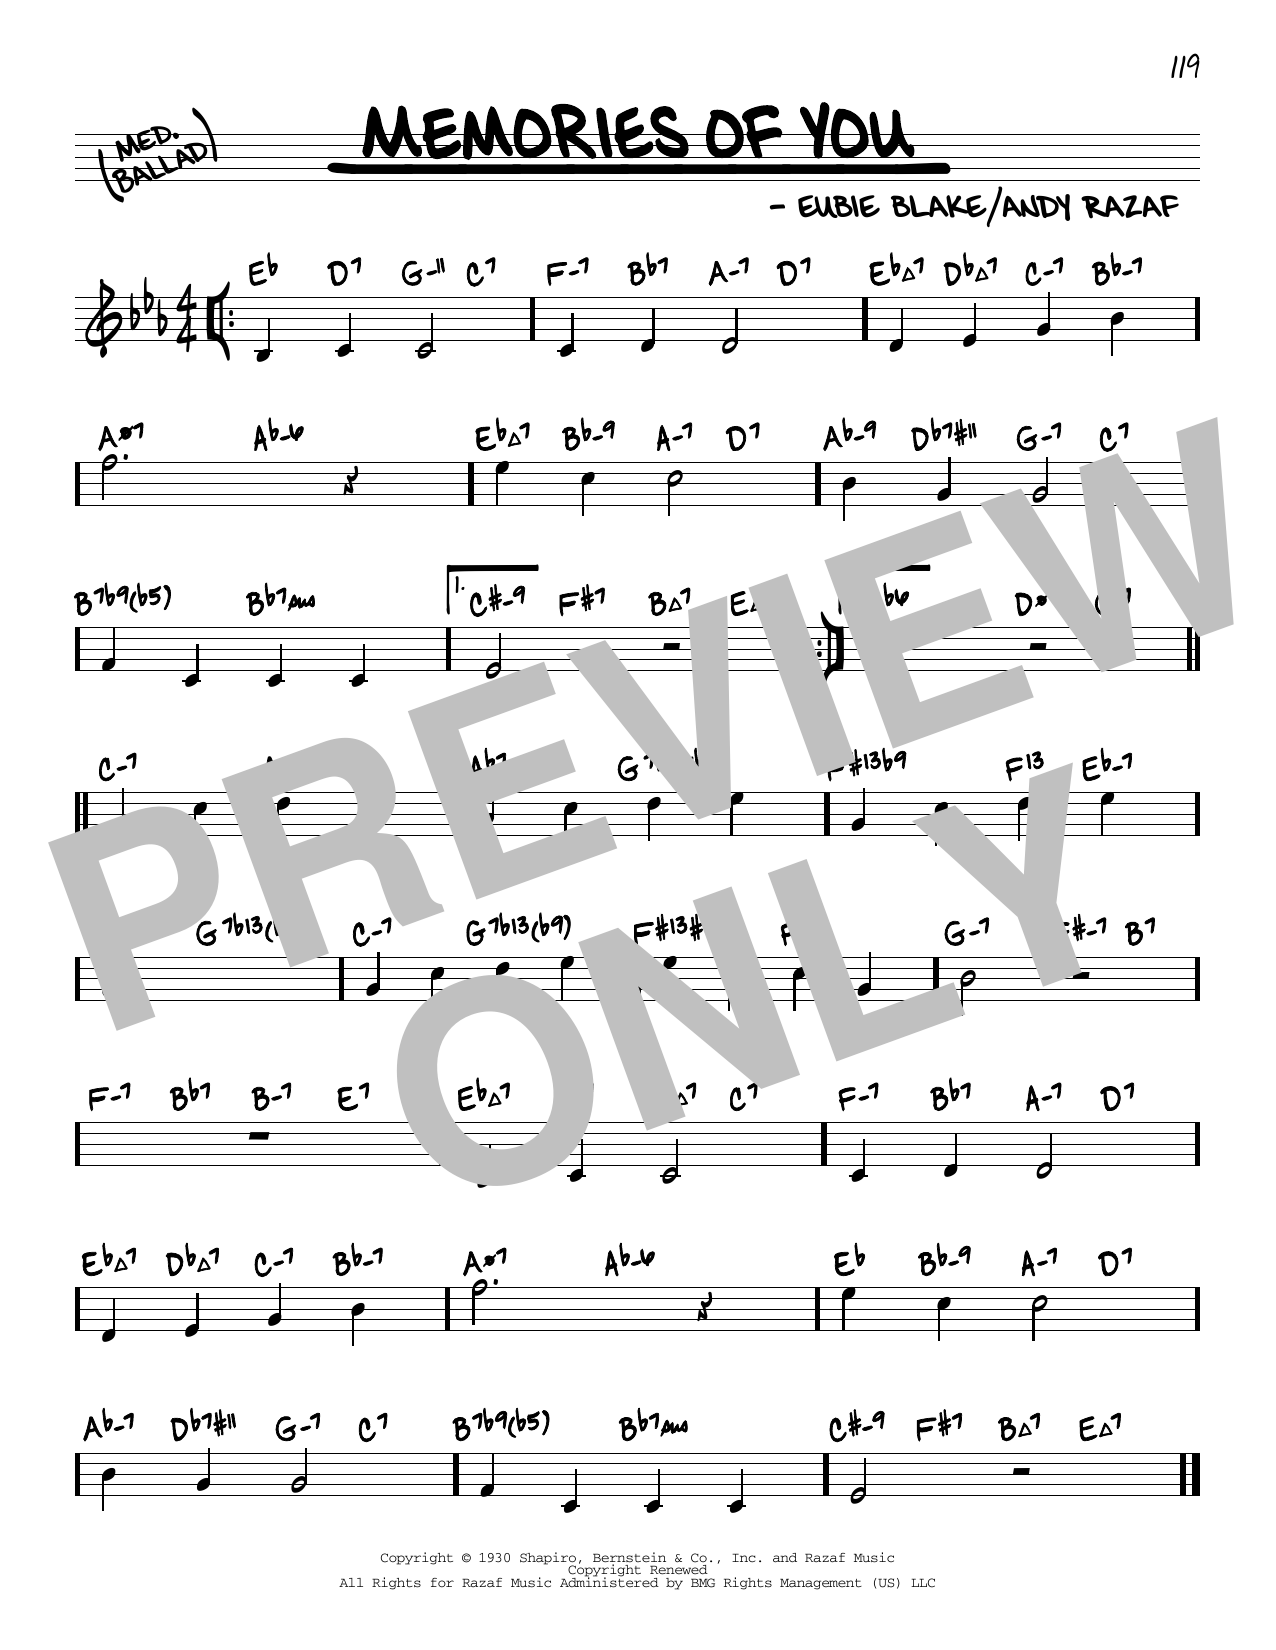 Eubie Blake Memories Of You (arr. David Hazeltine) Sheet Music Notes & Chords for Real Book – Enhanced Chords - Download or Print PDF